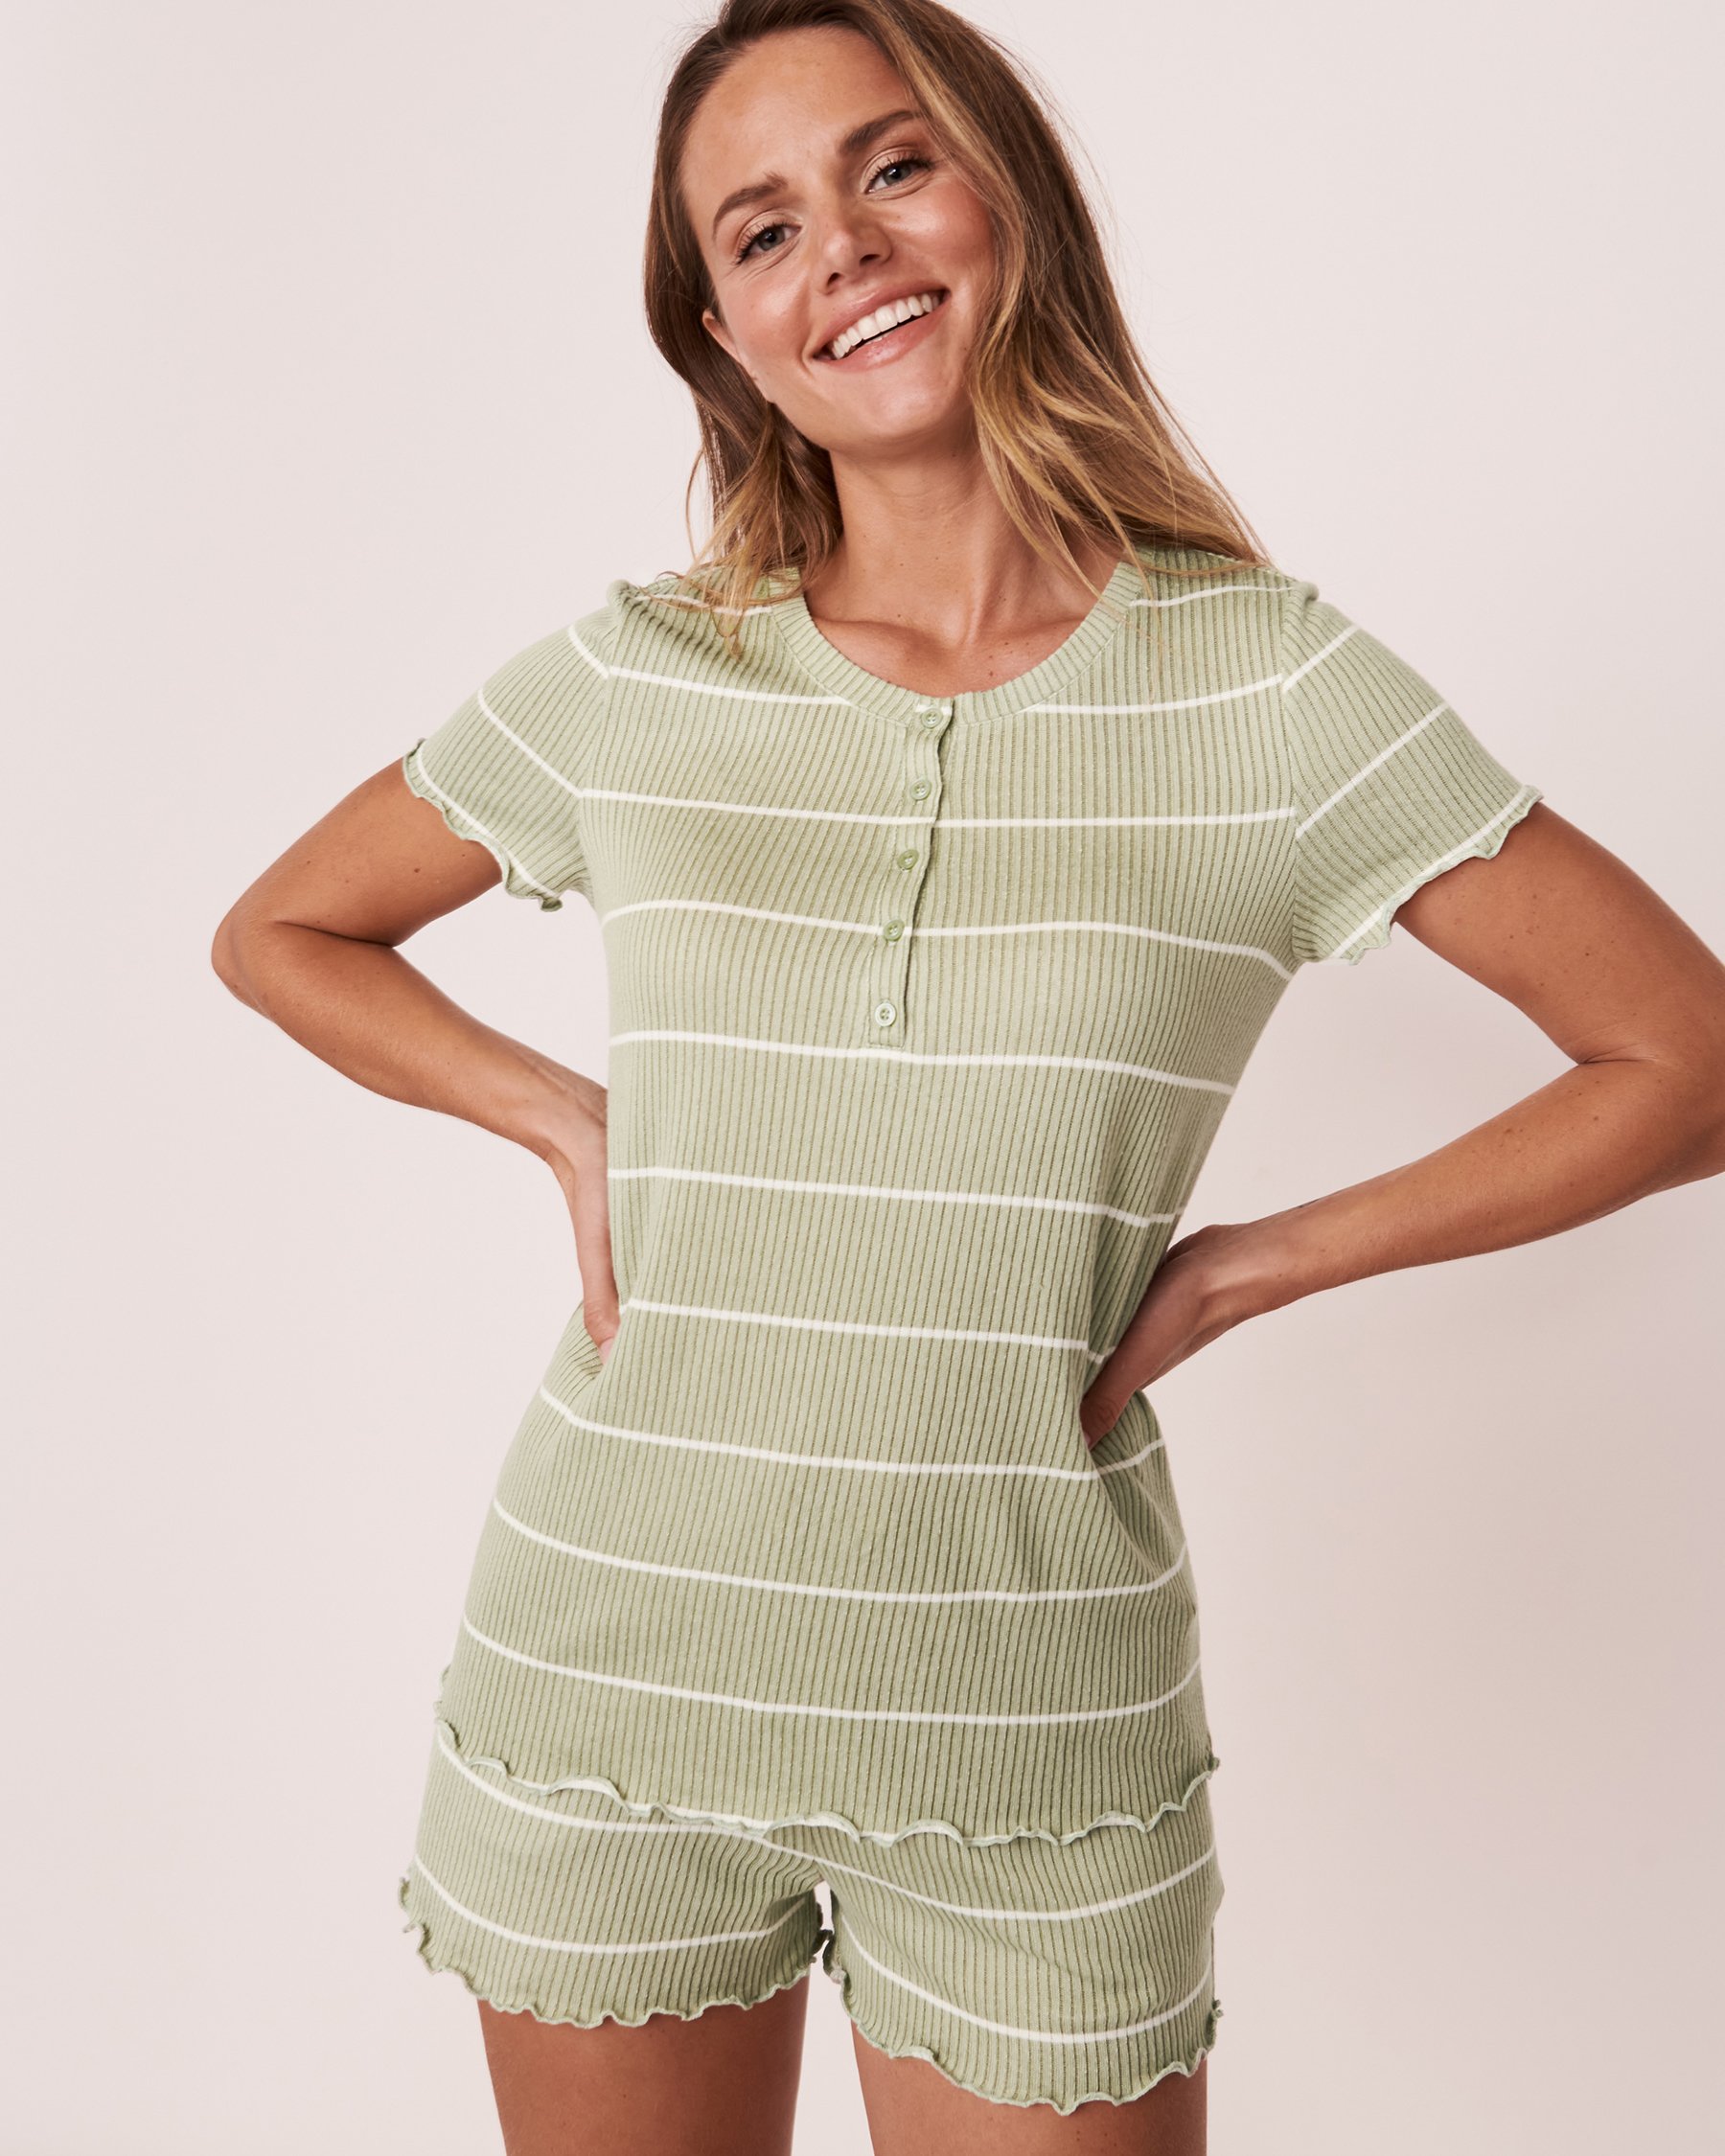 LA VIE EN ROSE Soft Ribbed Knit Henley T-shirt Sage stripes 40100209 - View1